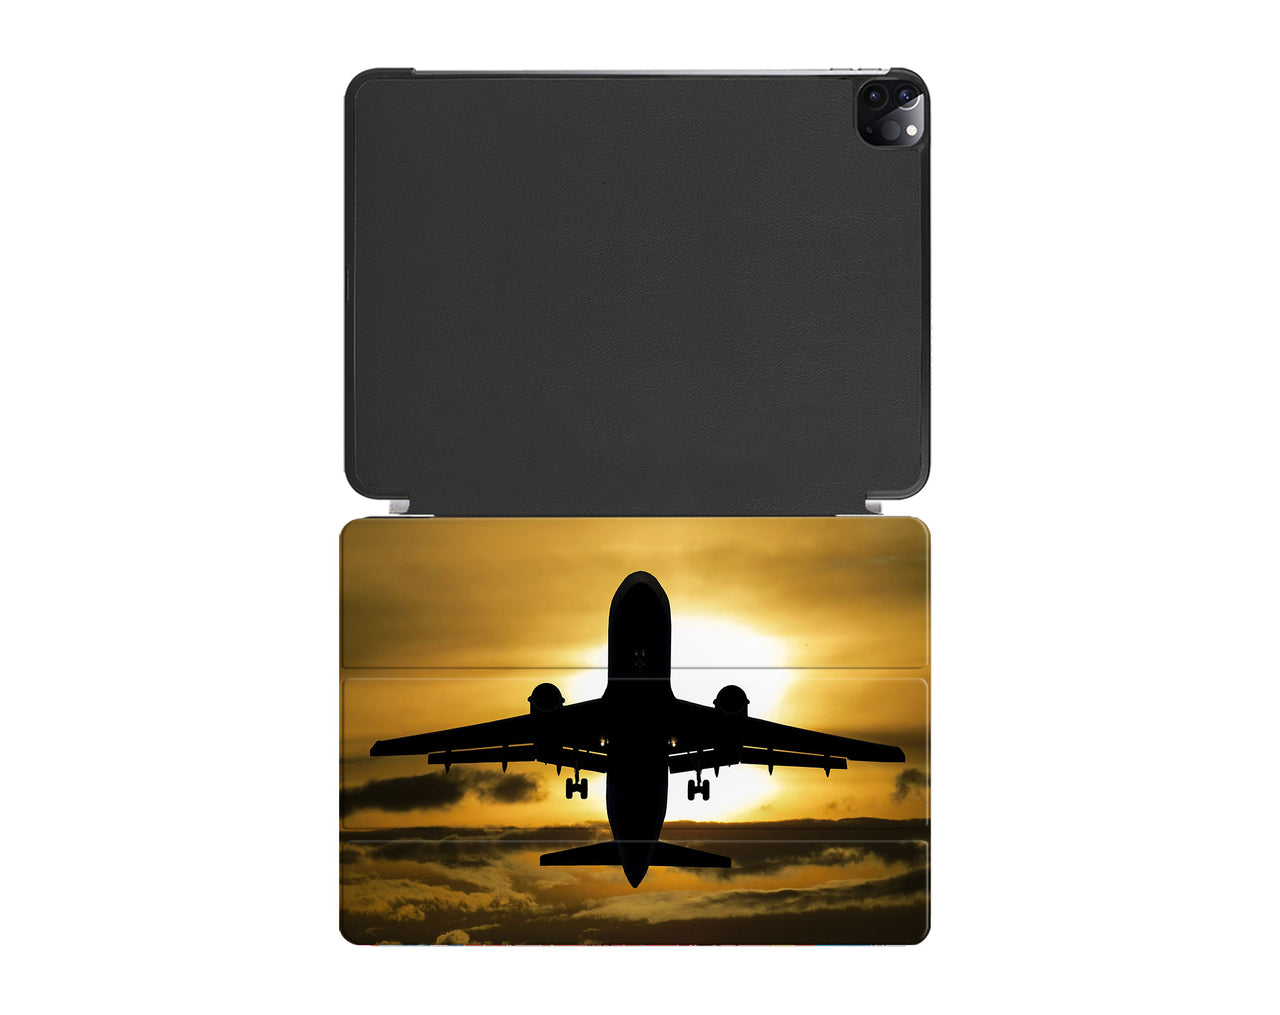 Departing Passanger Jet During Sunset Designed iPad Cases